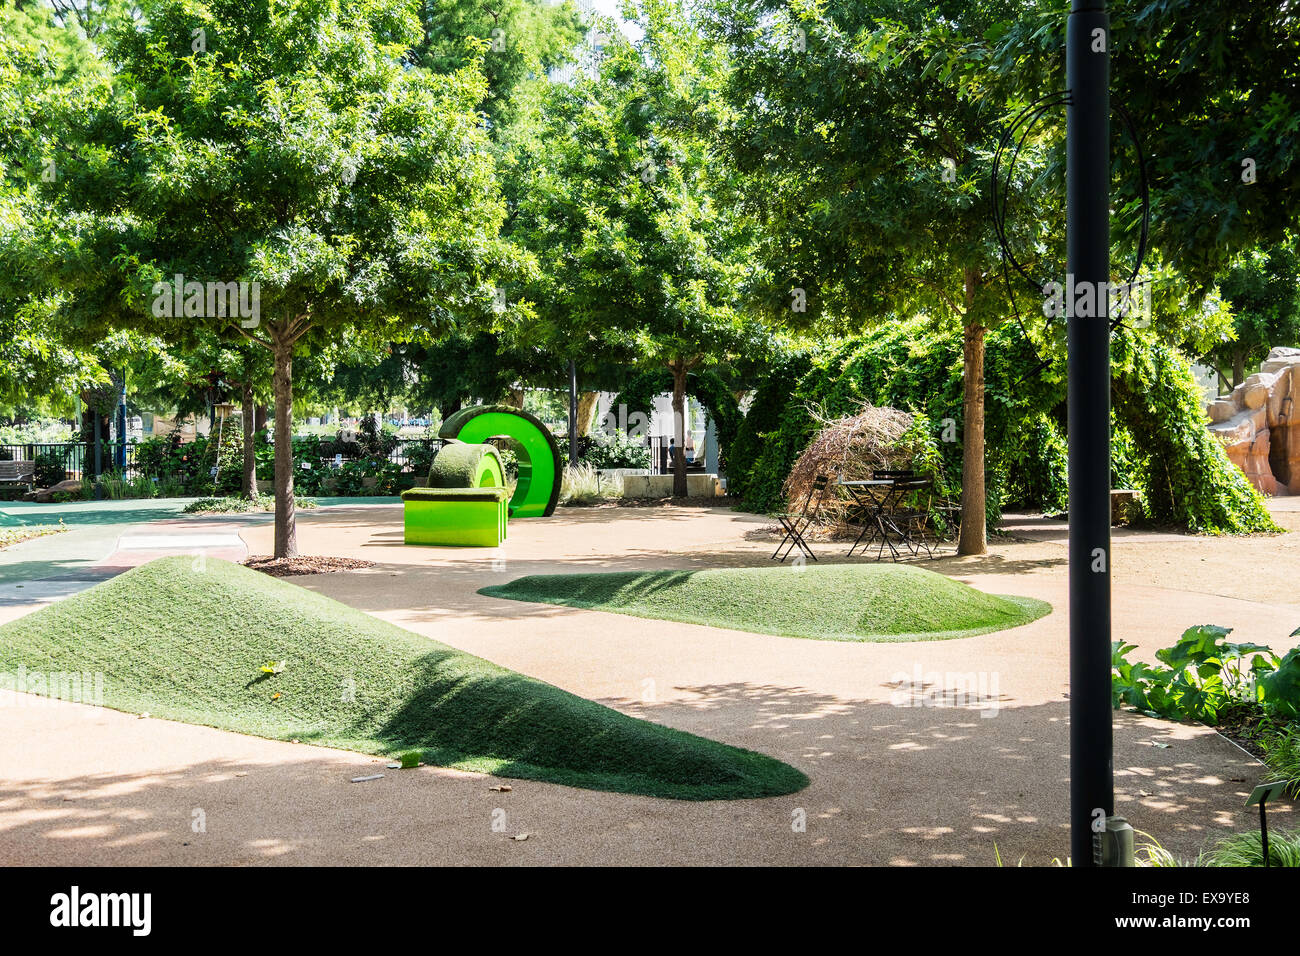 The Children's Garden and playground at the Myriad Botanical Gardens in Oklahoma City, Oklahoma, USA. Stock Photo